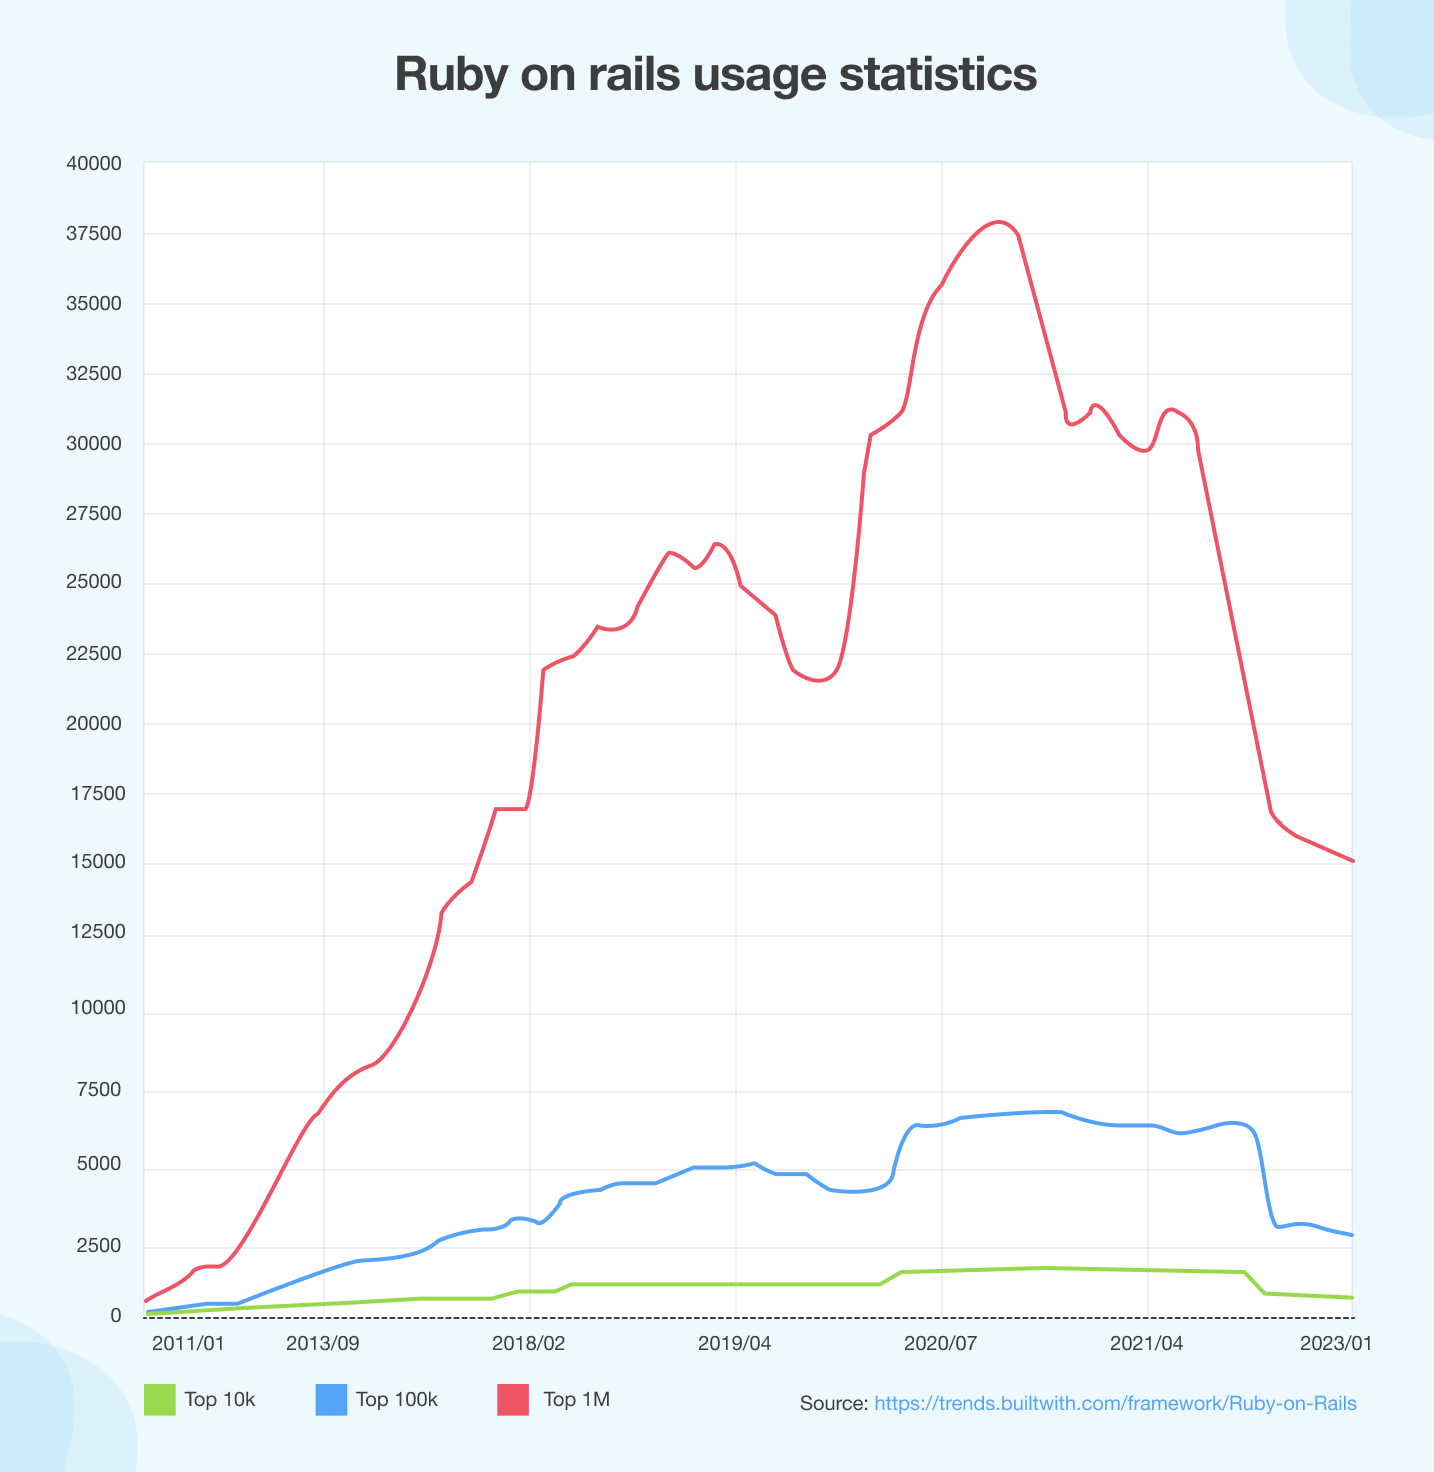 RoR Usage Statistics